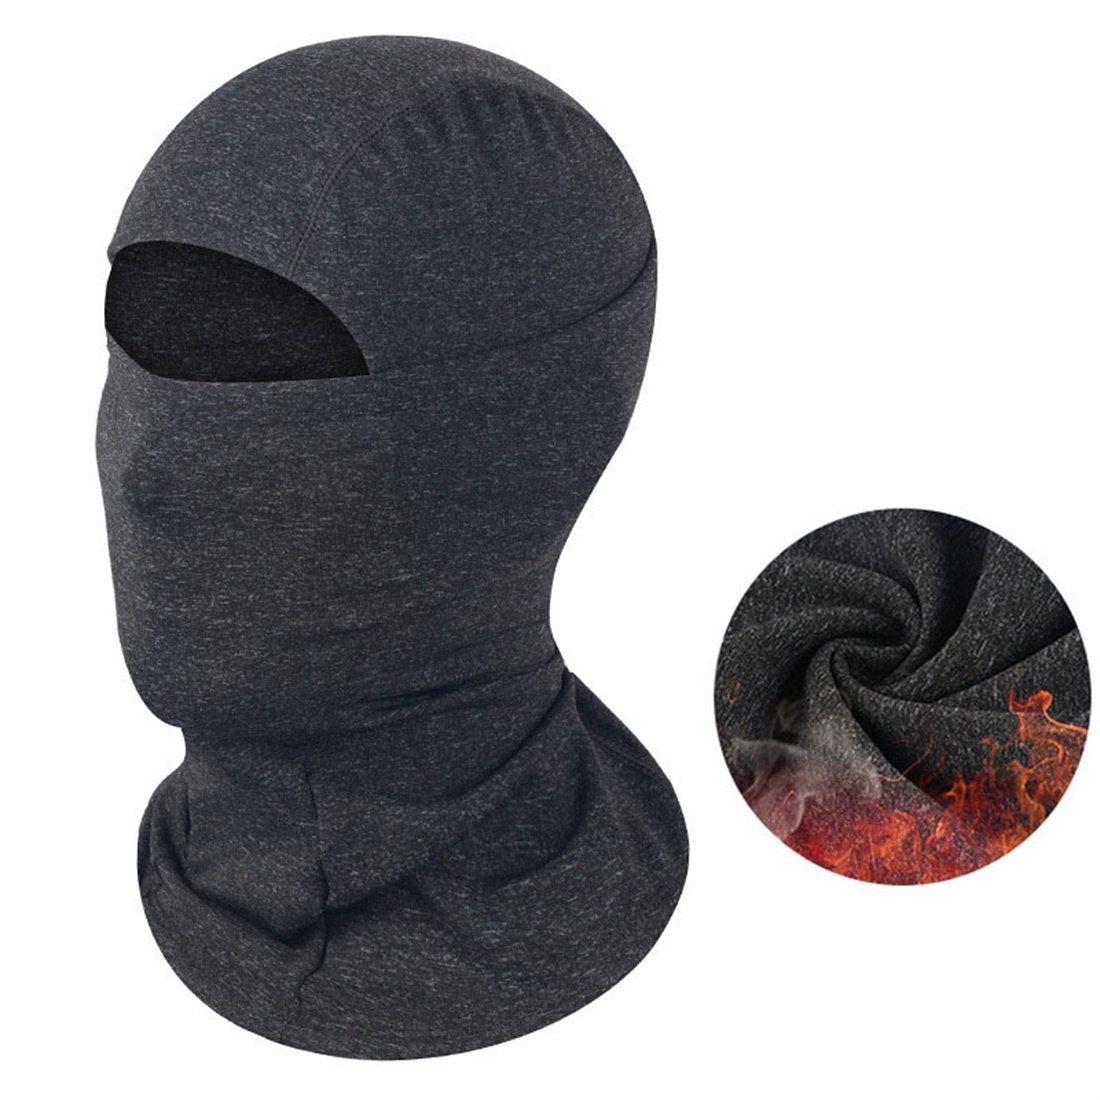 DÖRÖY Sturmhaube Winter Outdoor Kälteschutz Warm Ski Kopfbedeckung, Reiten Masken dunkelgrau | Sturmhauben